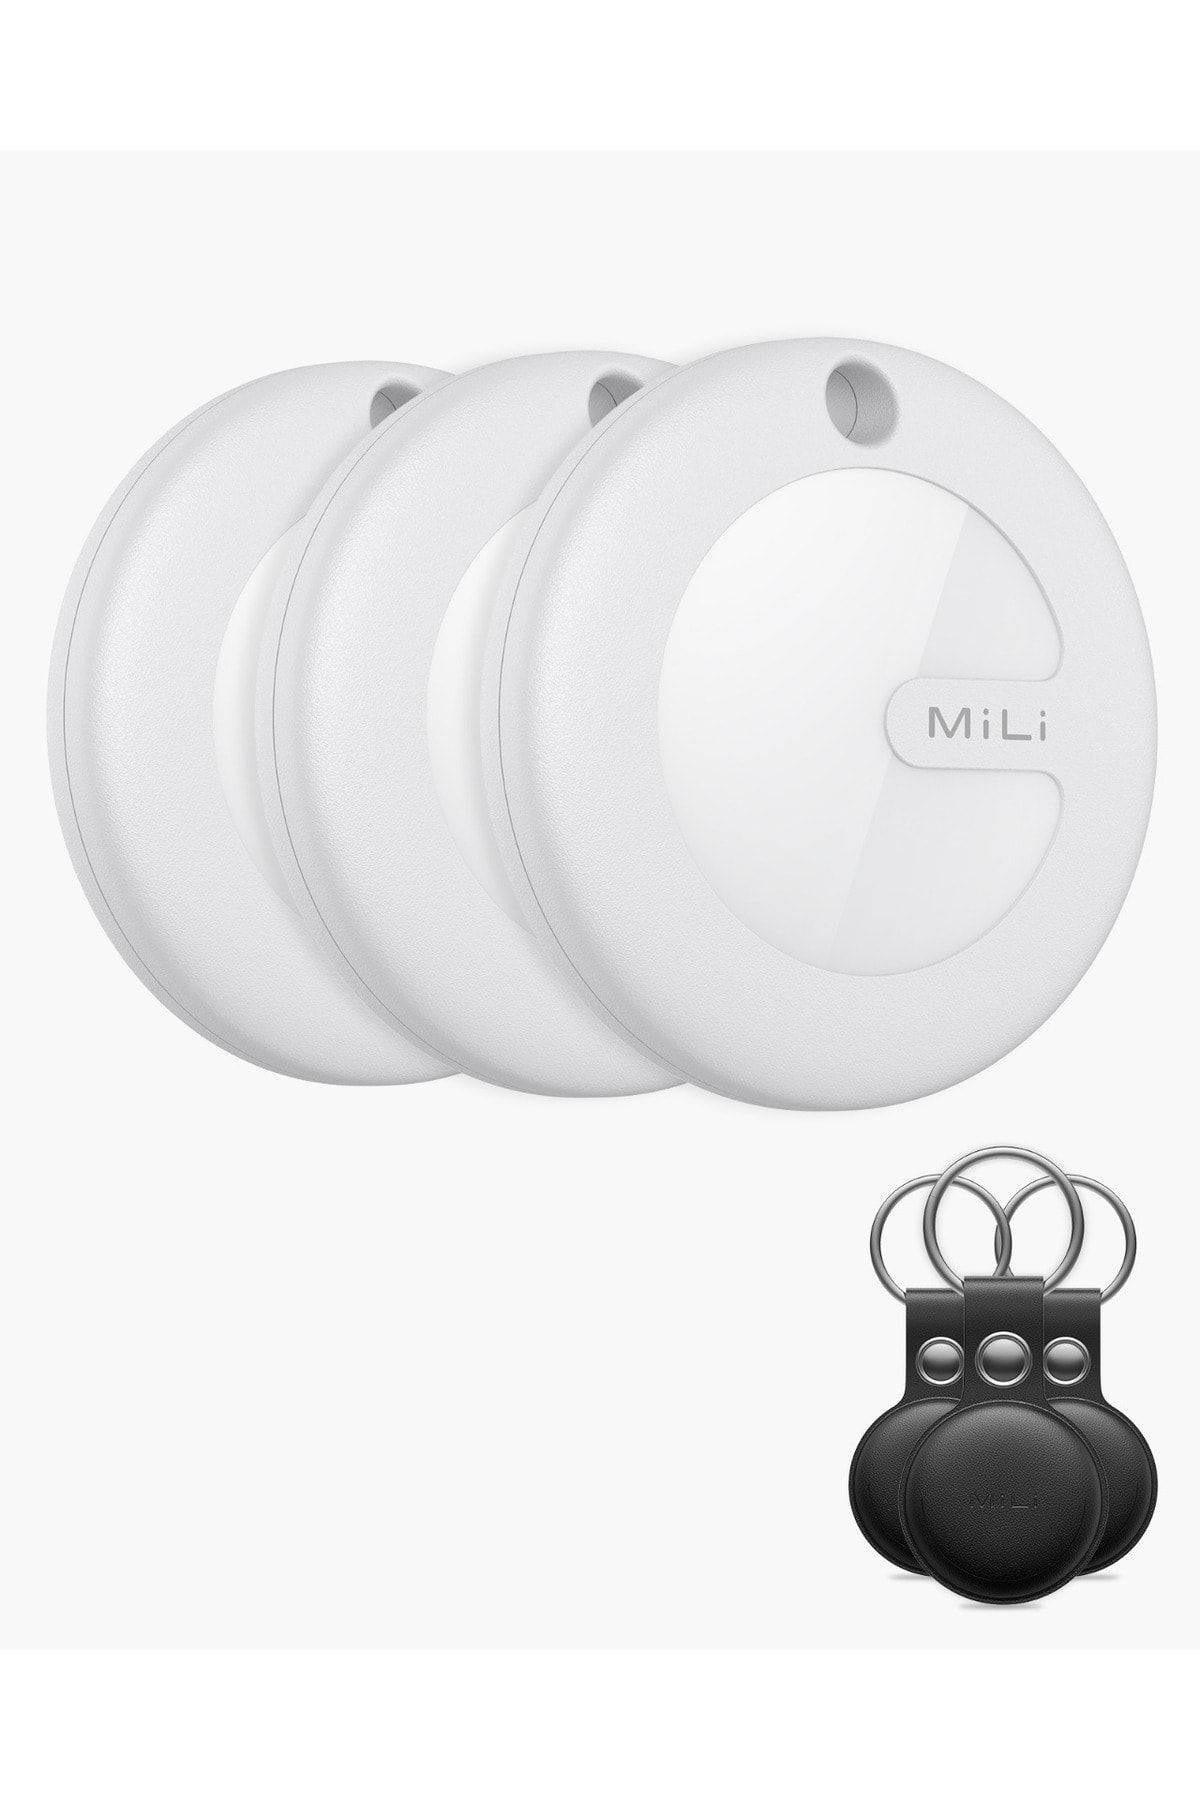 MiLi Mitag (3 Pack) Apple Uyumlu Anahtarlık Konum Takip Cihazı - Siyah Hdp163